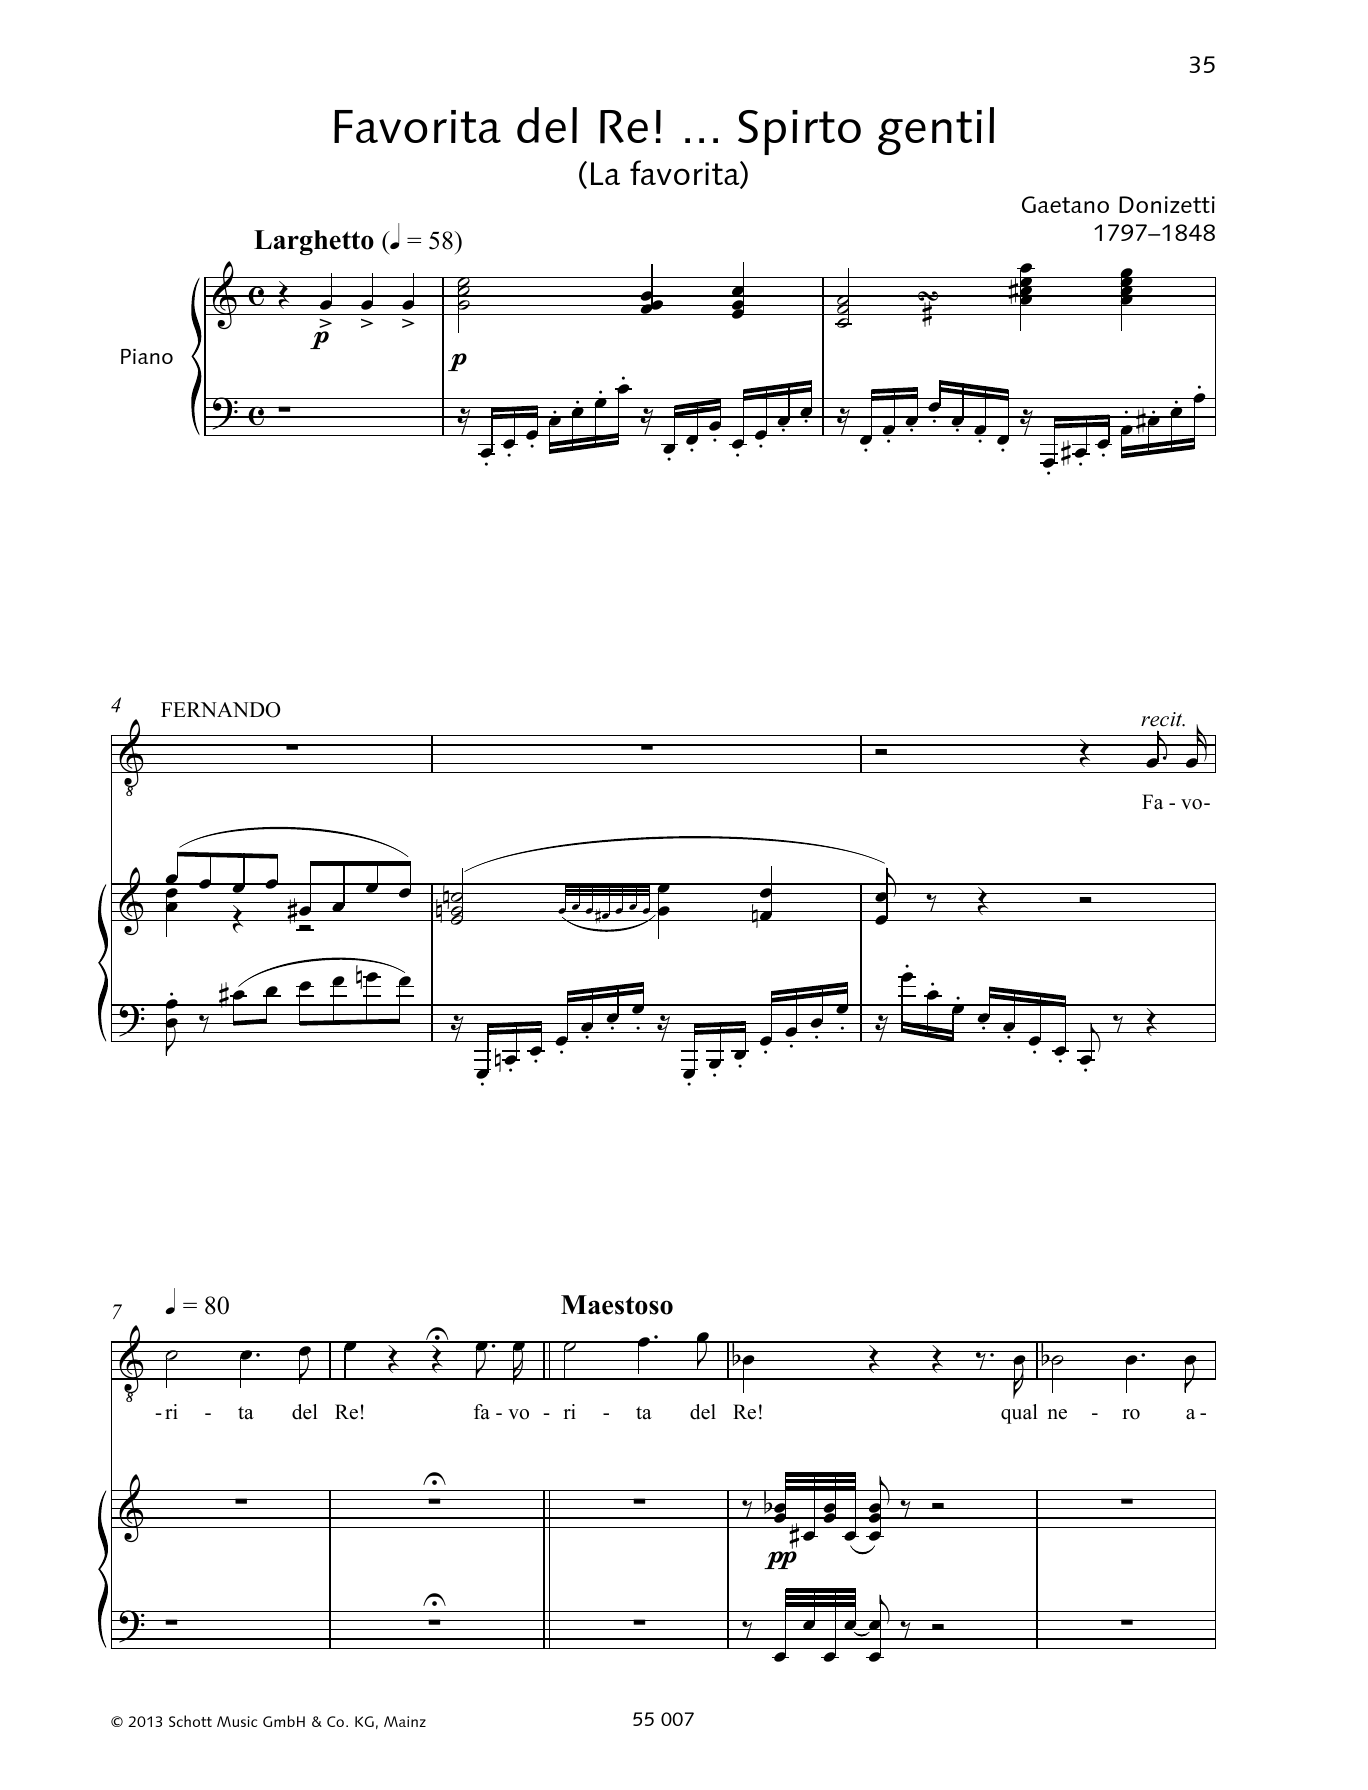 Download Francesca Licciarda Favorita del Re! ... Spirto gentil Sheet Music and learn how to play Piano & Vocal PDF digital score in minutes